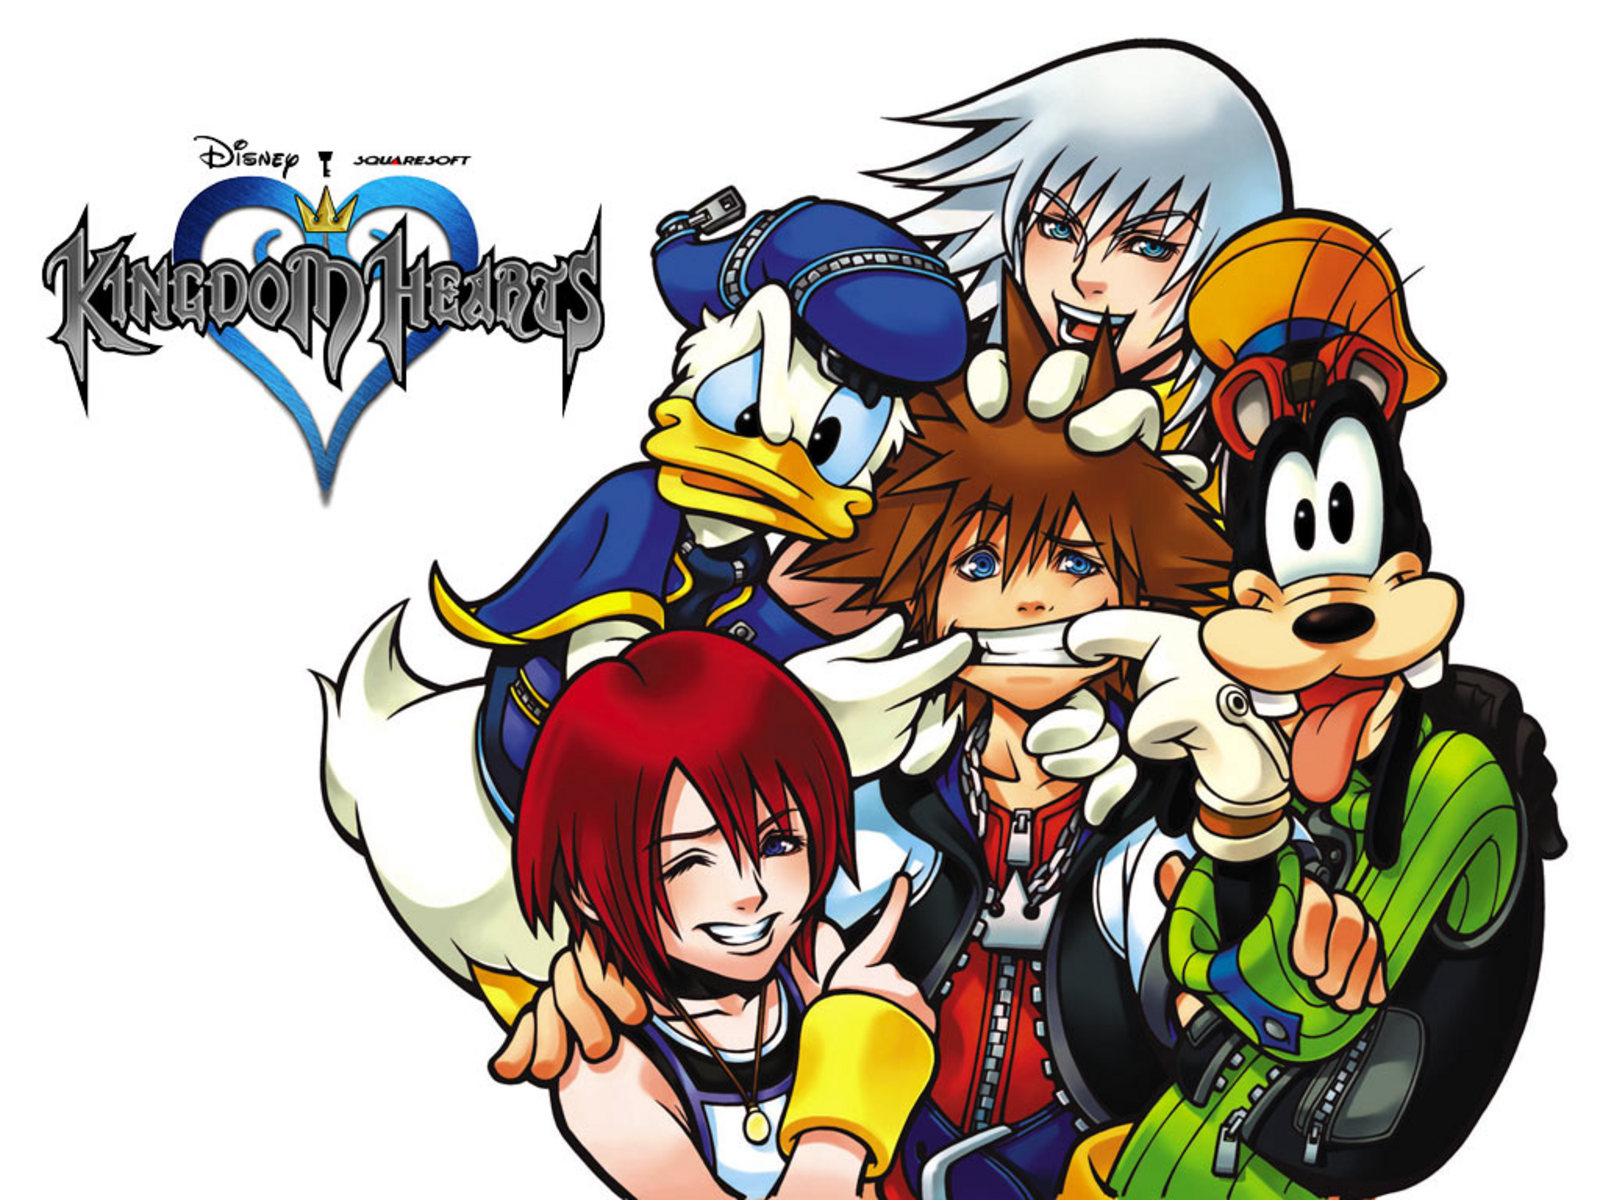 Ore no Sutōrī: Kingdom Hearts Series
